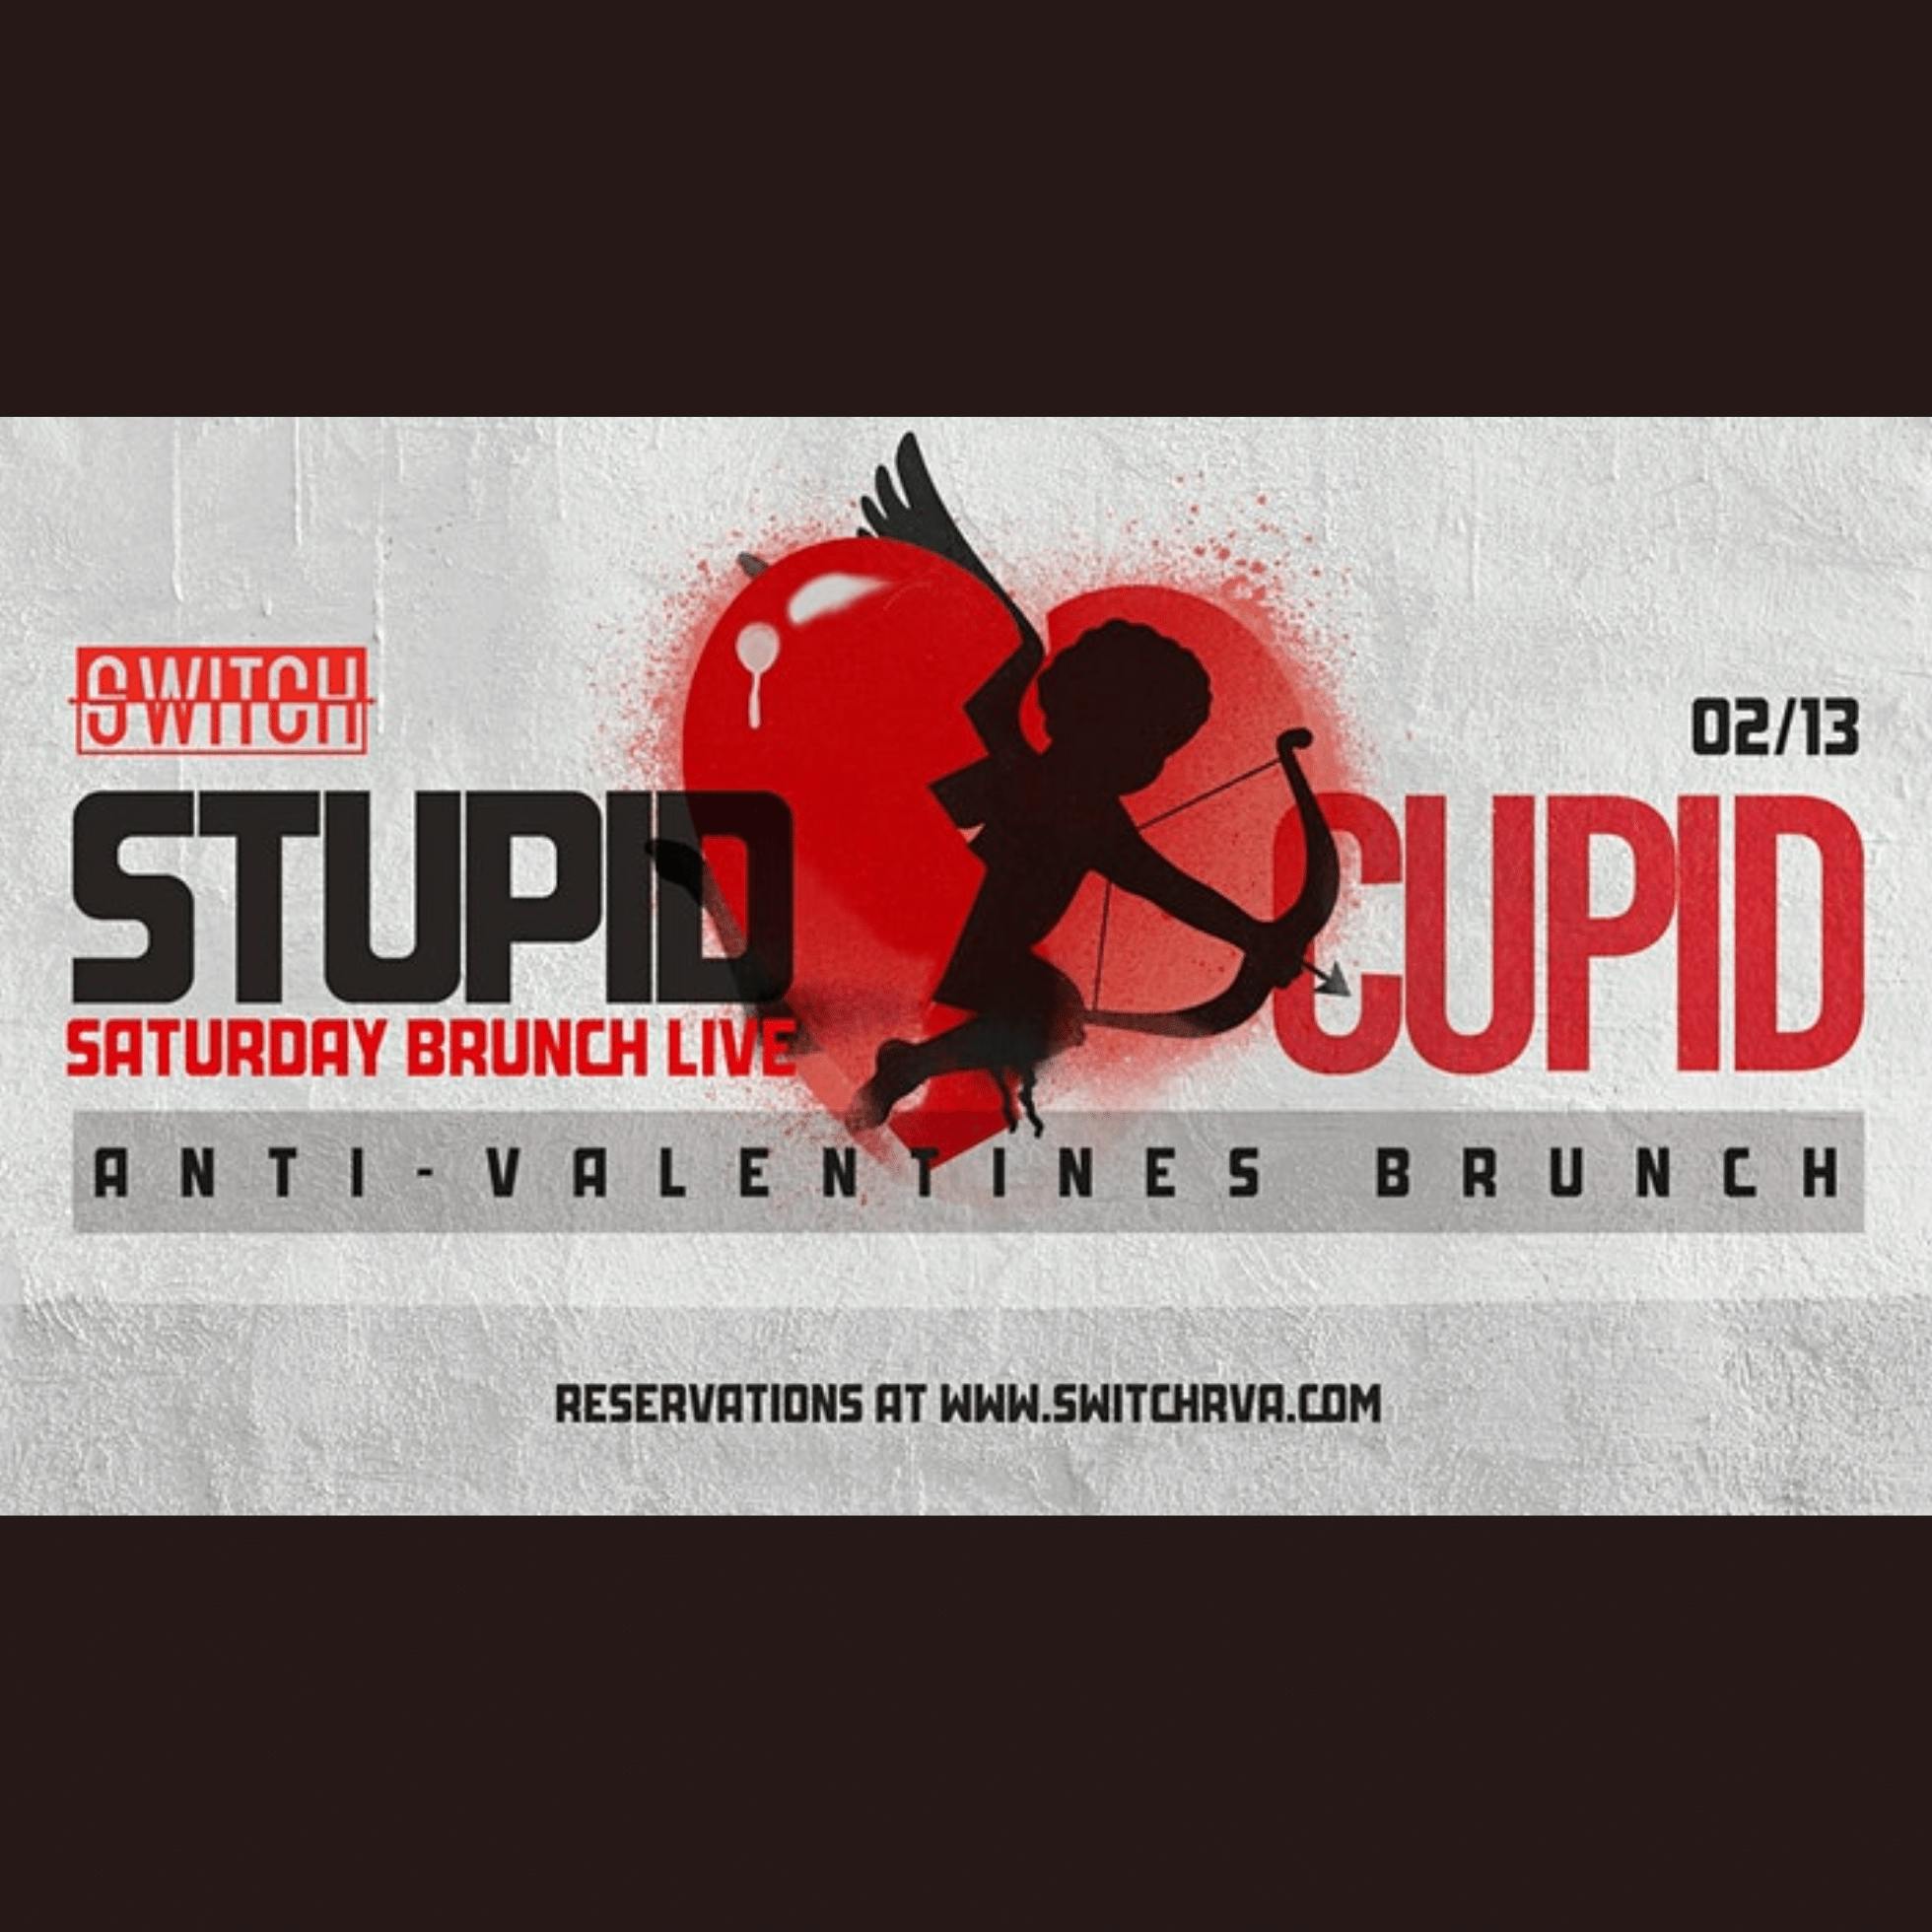 Stupid Cupid Brunch